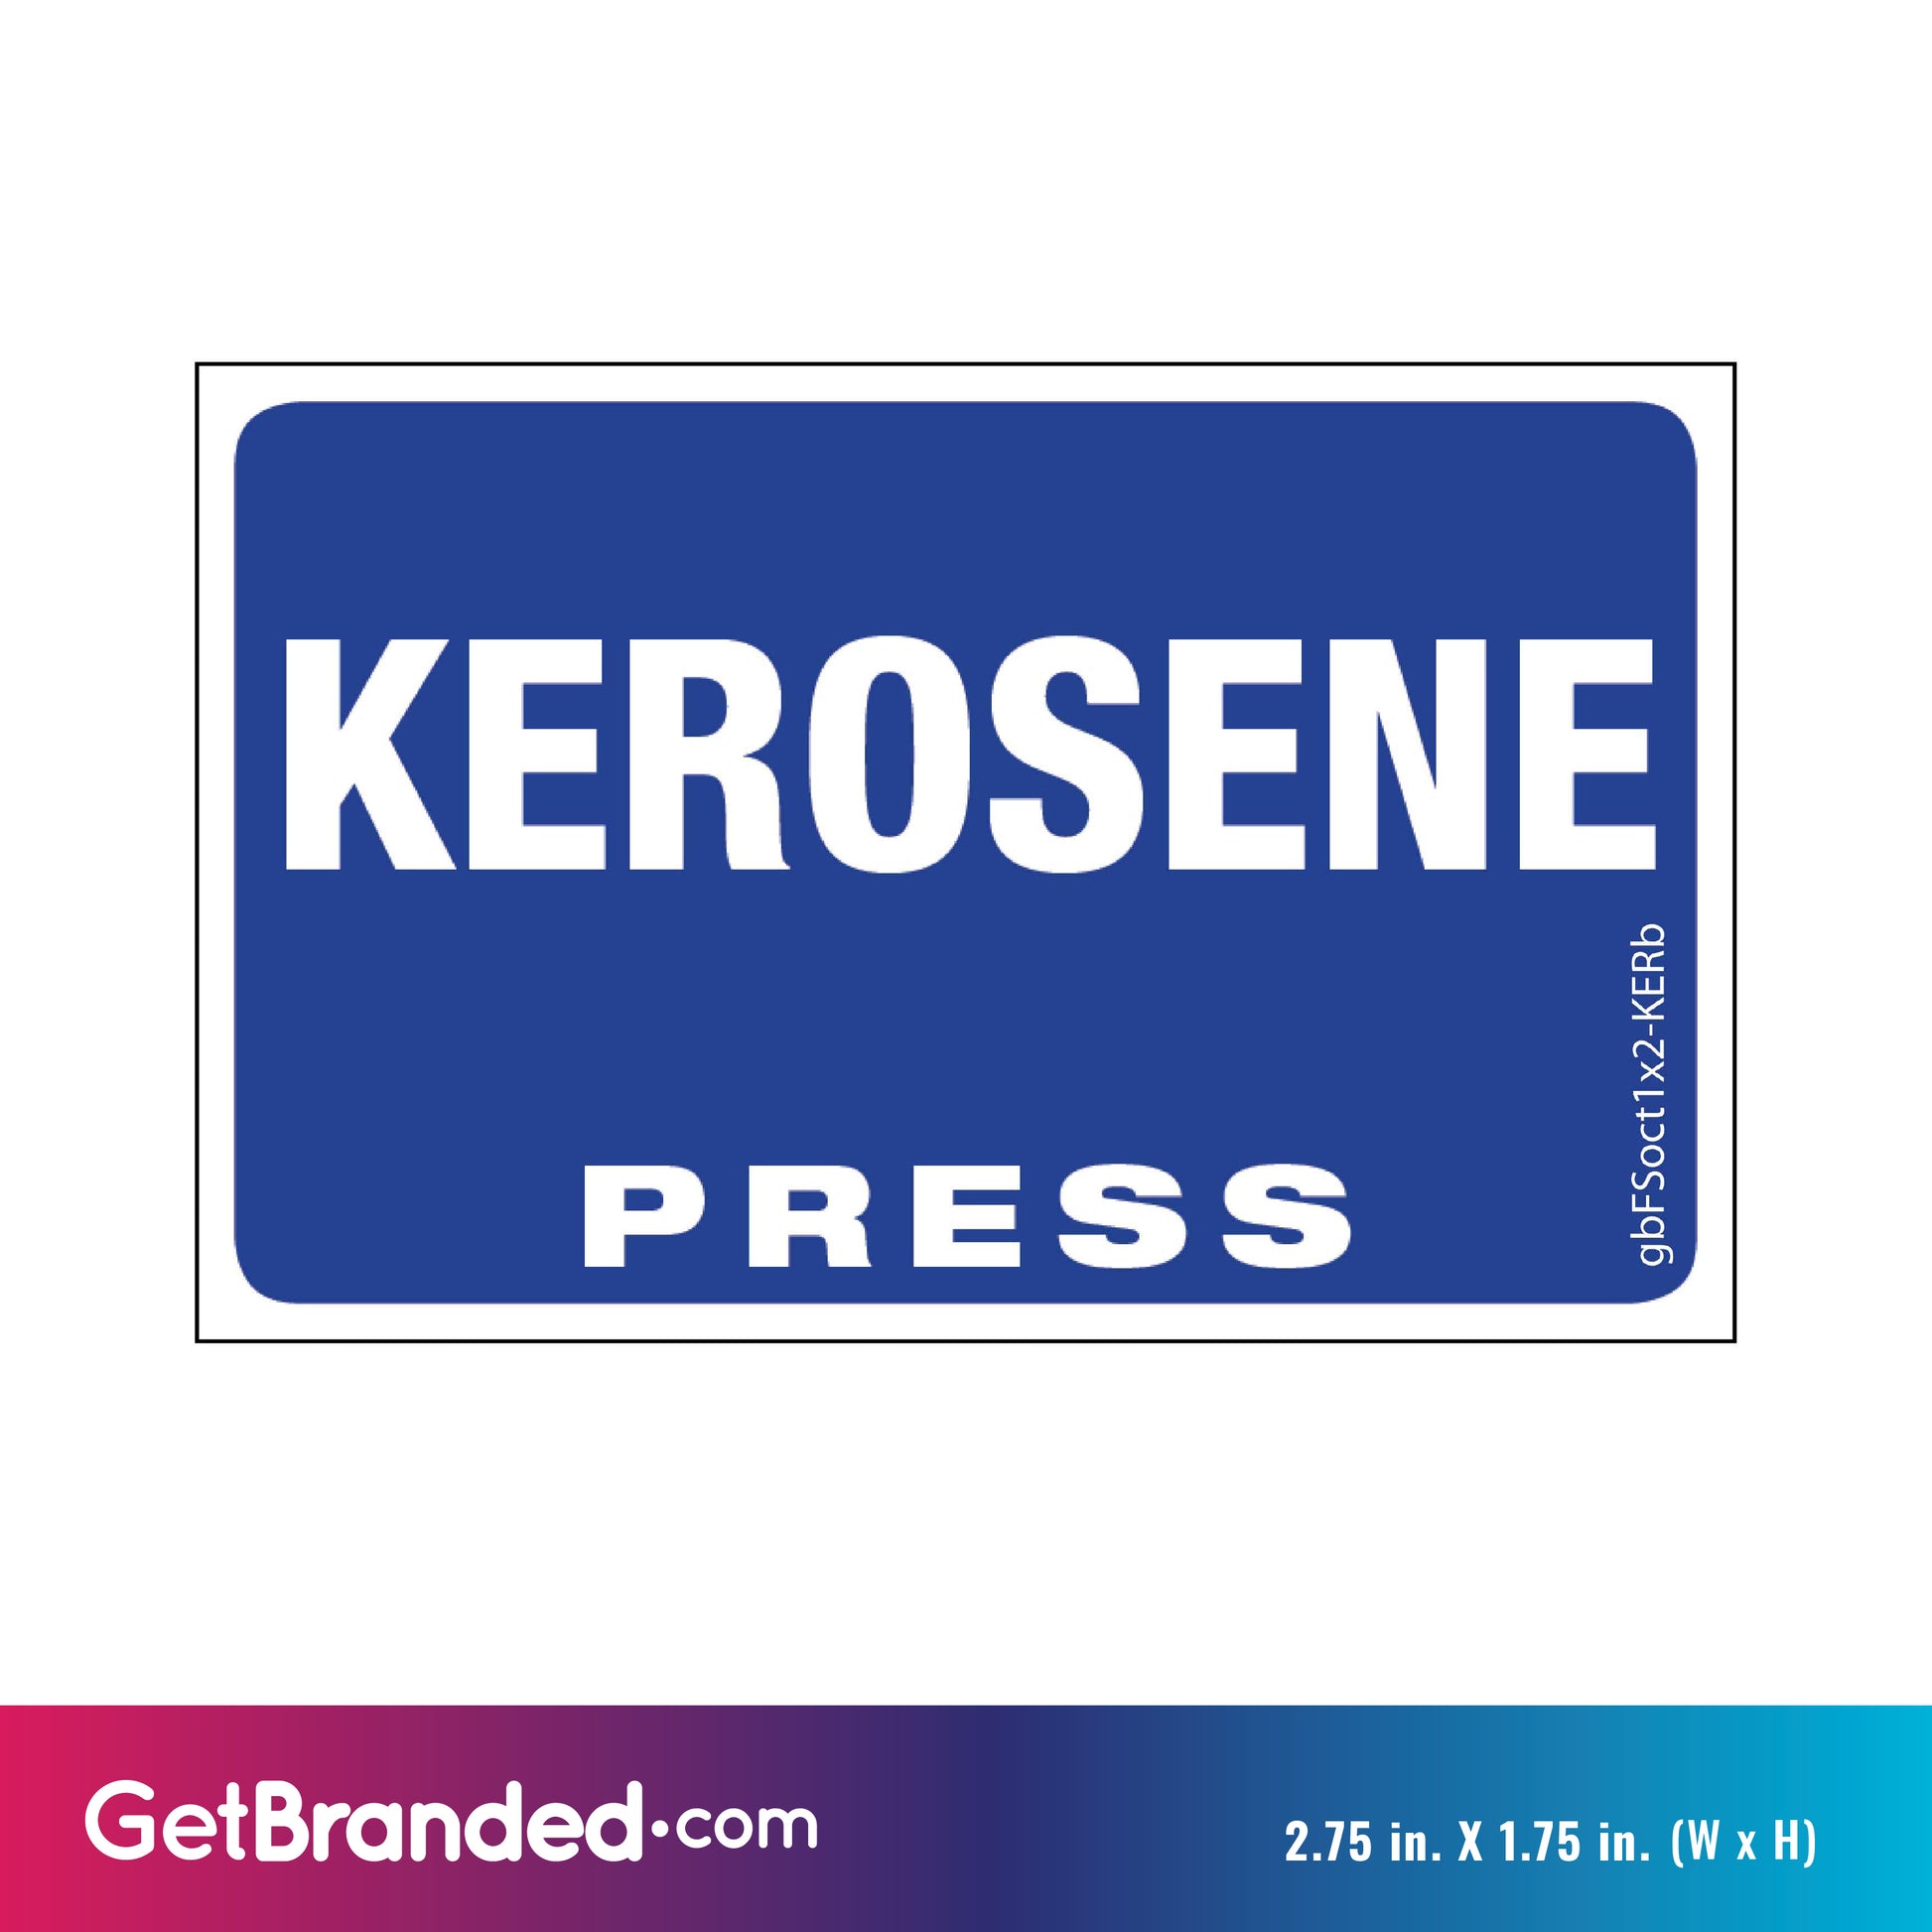 Kerosene Press Octane Rating Decal, Blue size guide.